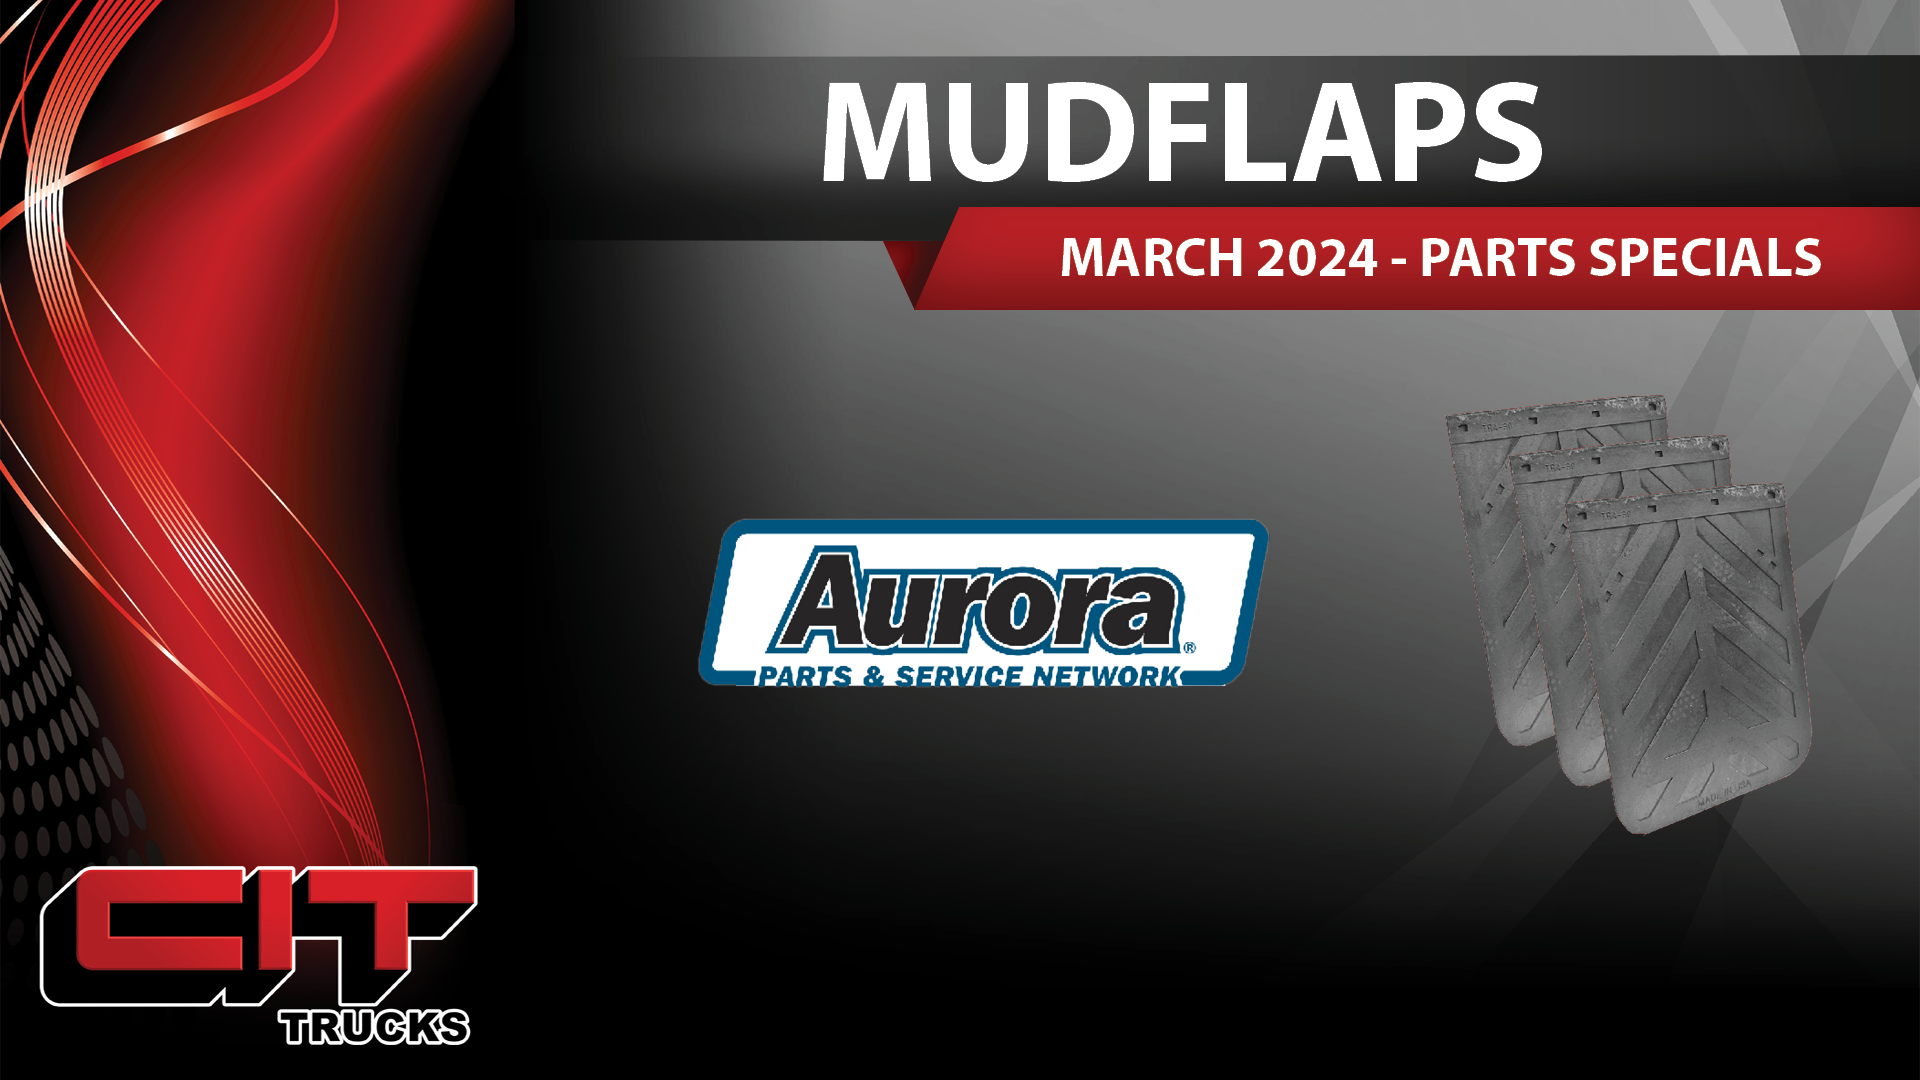 March 2024 Parts Specials – Mudflaps